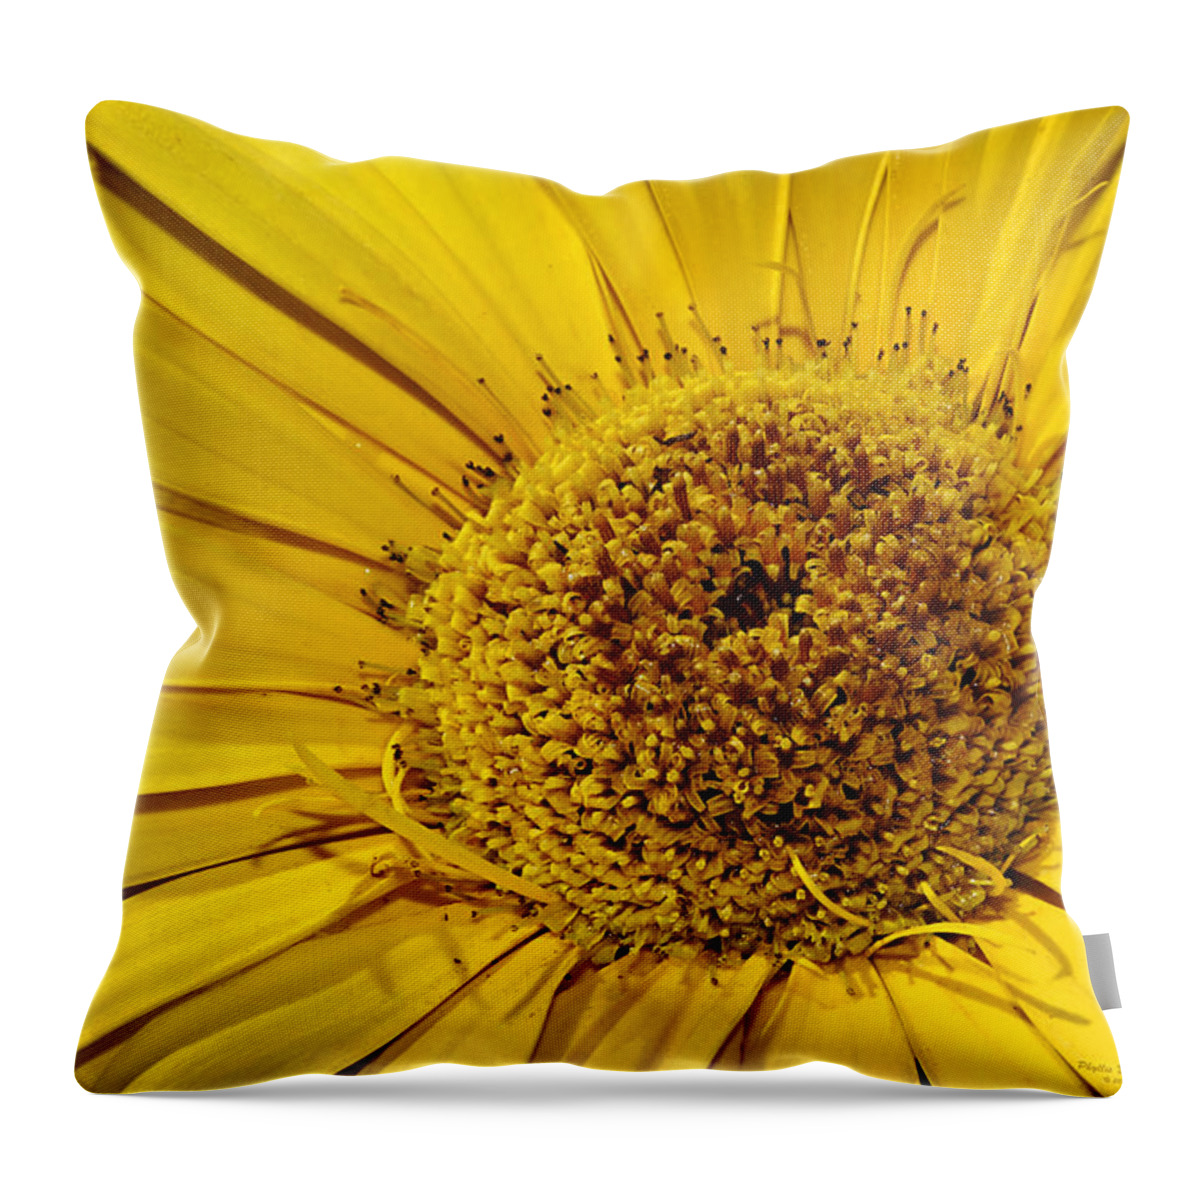 Flower Throw Pillow featuring the photograph Sunburst by Phyllis Denton